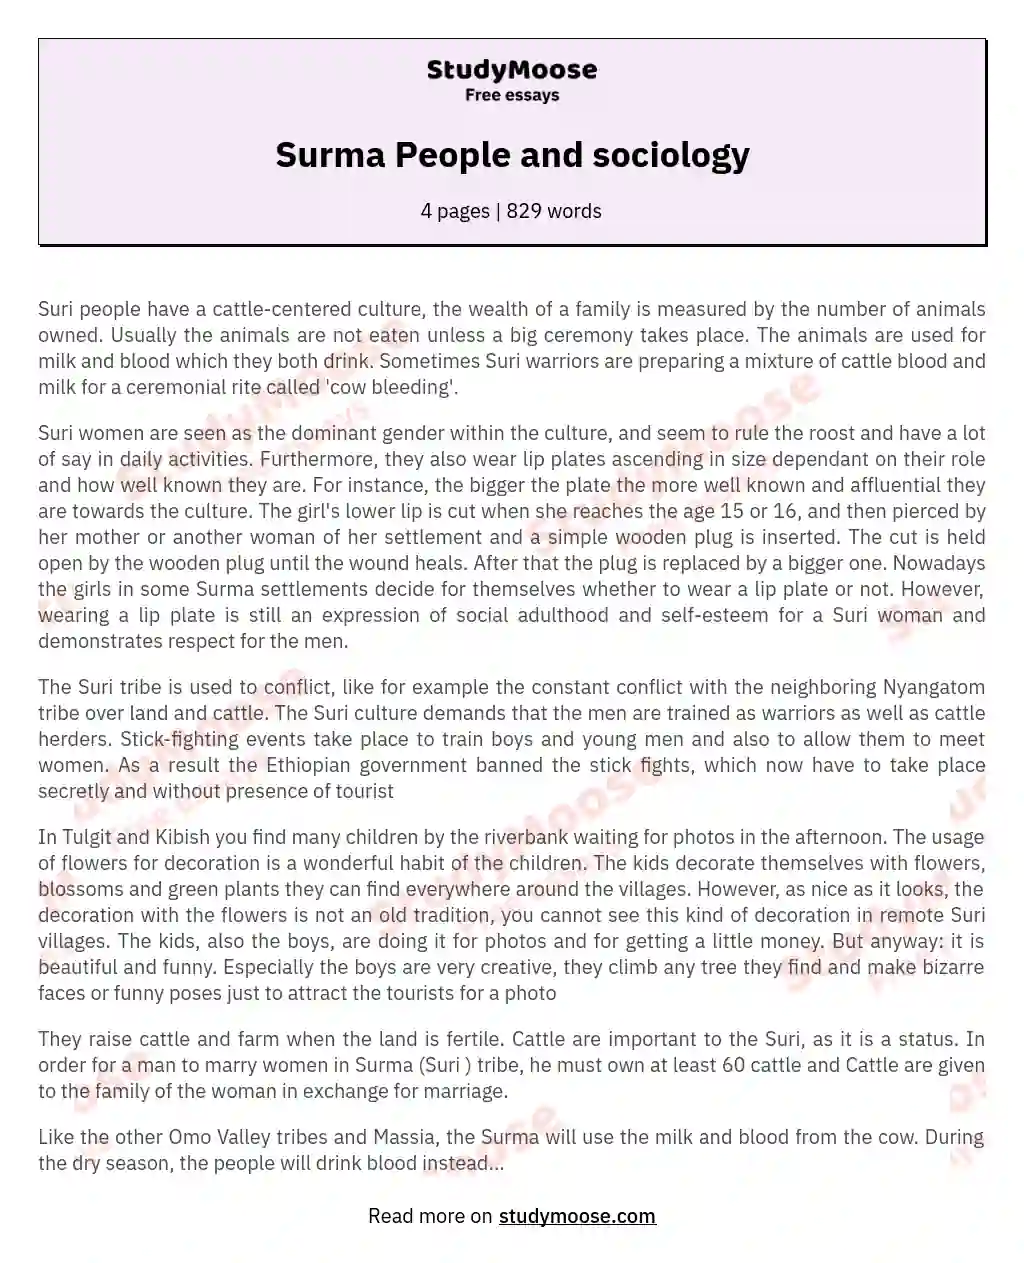 Surma People and sociology essay